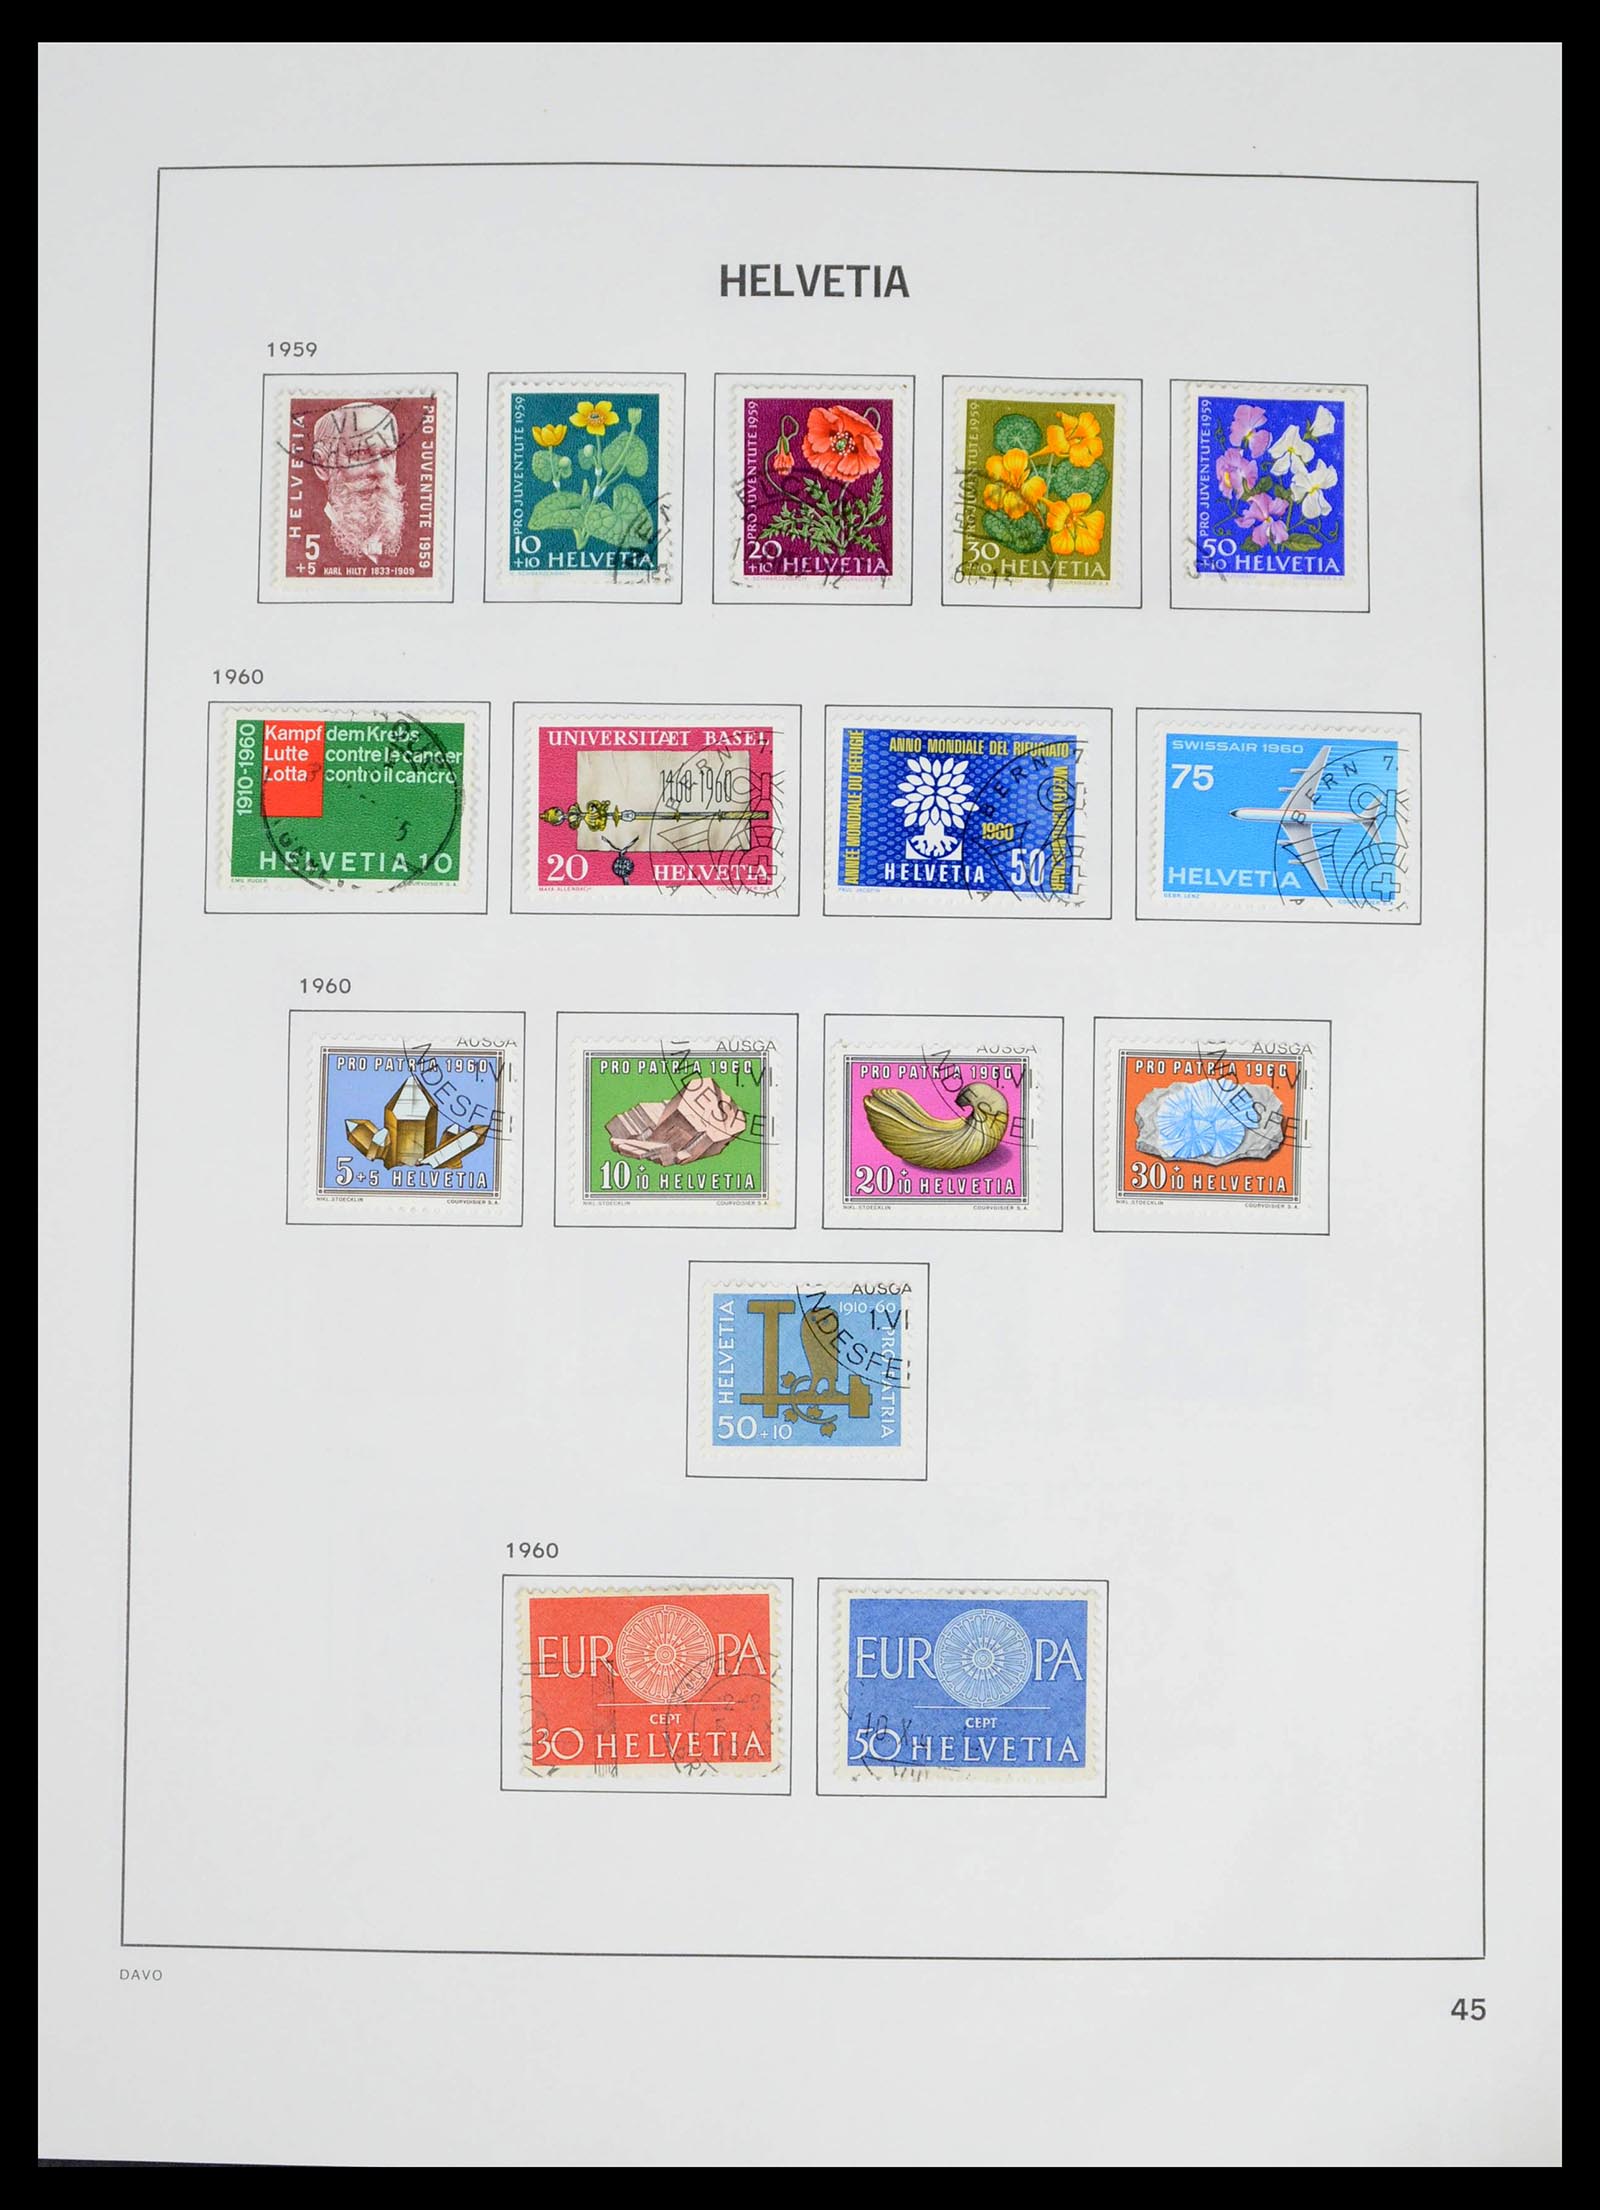 39363 0036 - Stamp collection 39363 Switzerland 1939-2013.